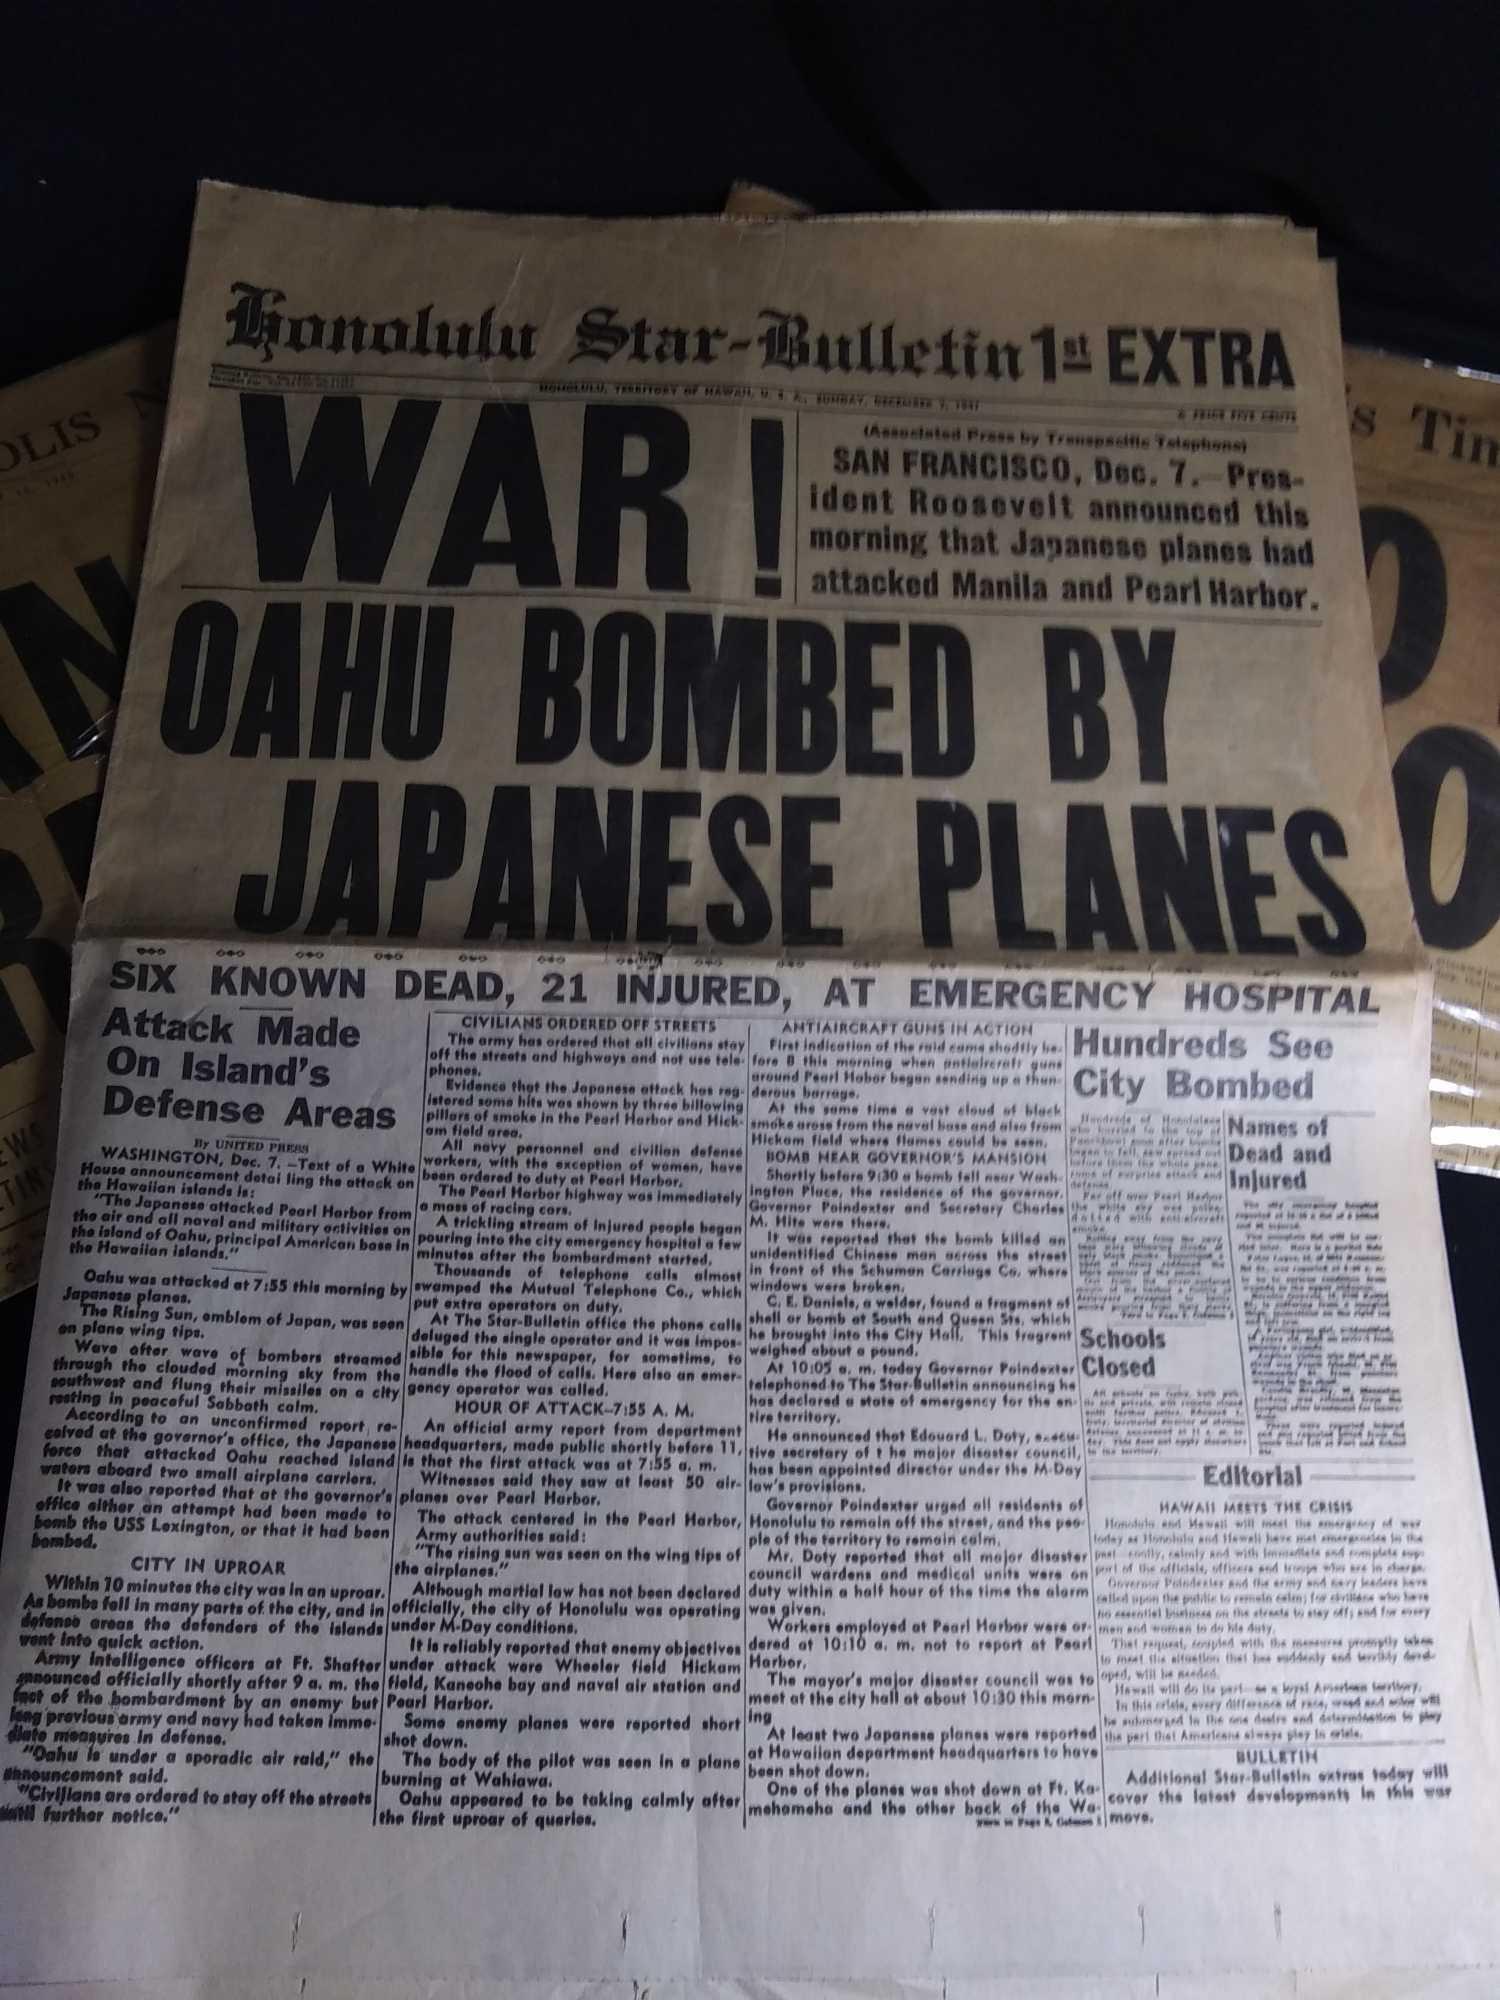 SHOCKING (1) 1941 (2) 1945 WORLD WAR II HEADLINE NEWSPAPERS